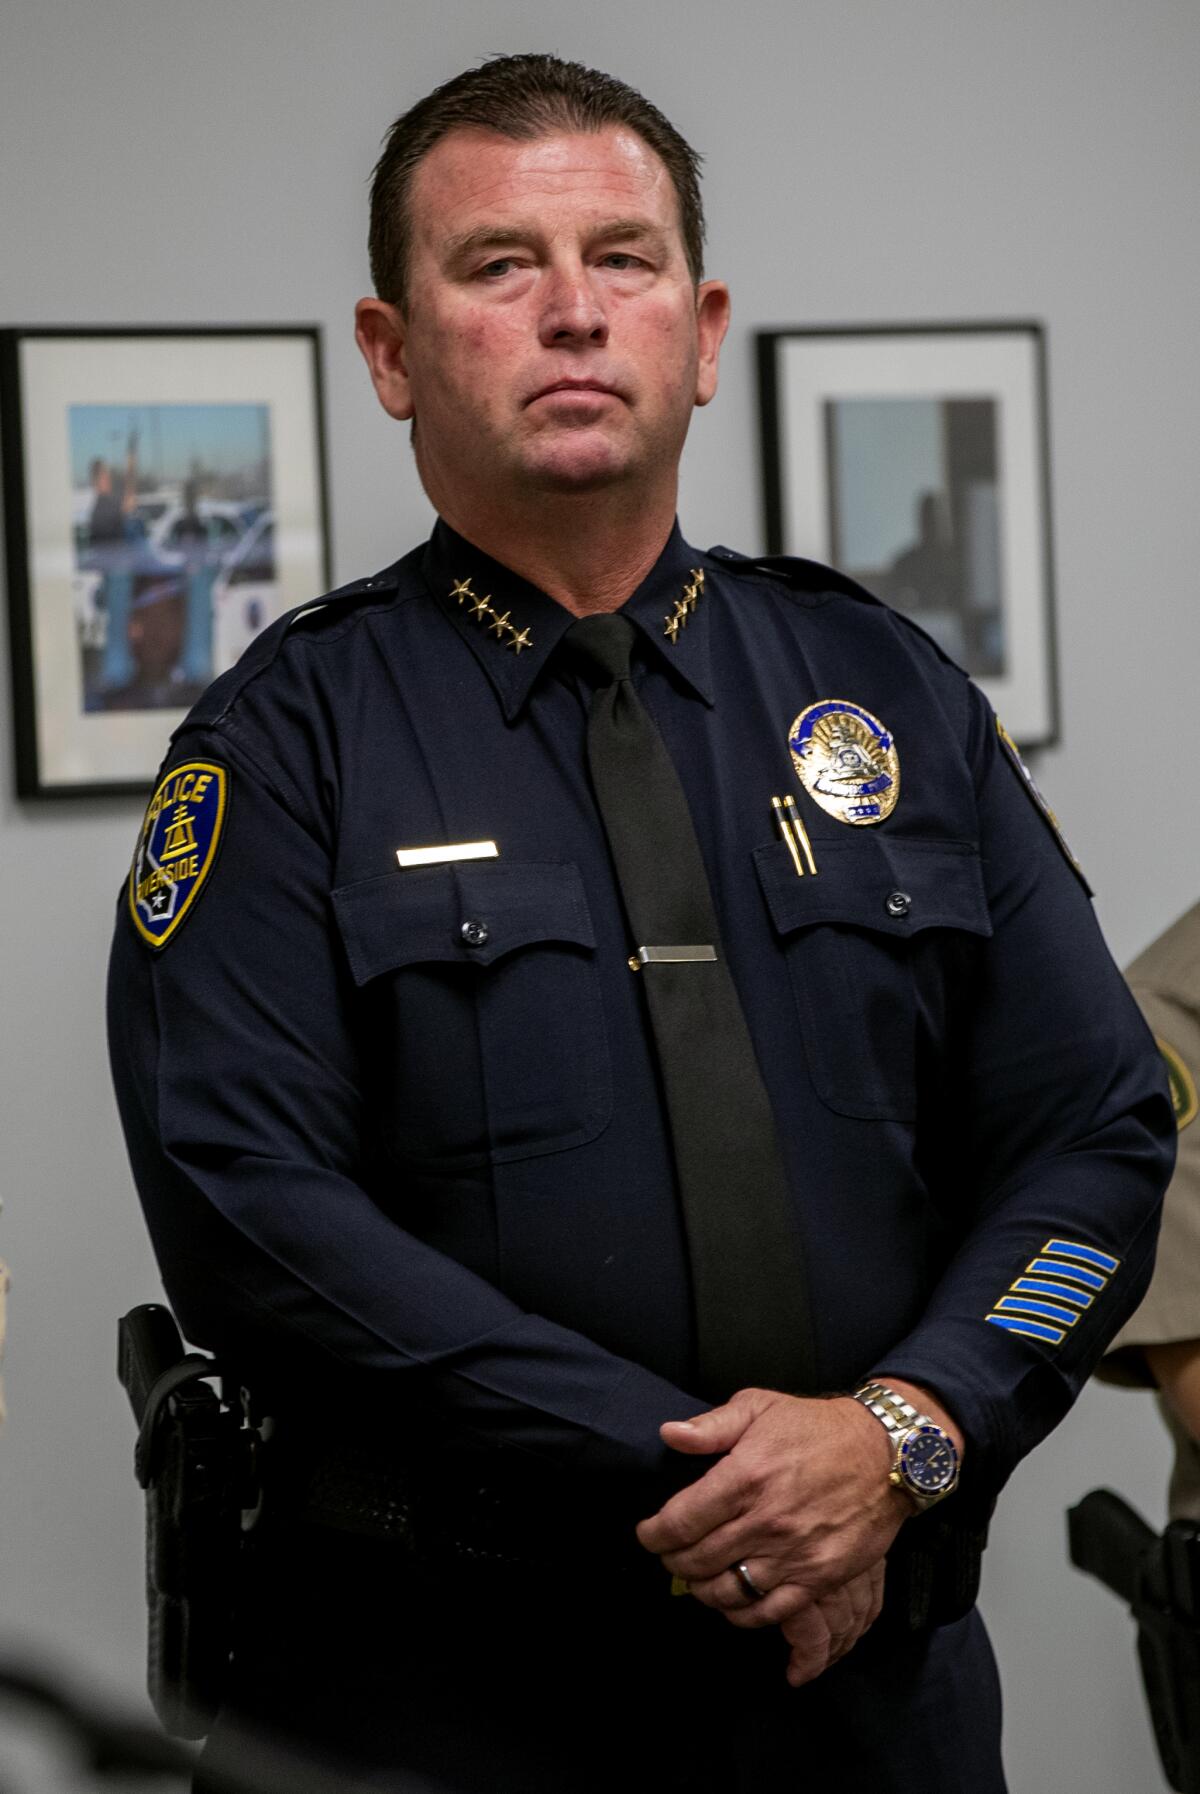 A police chief in uniform.